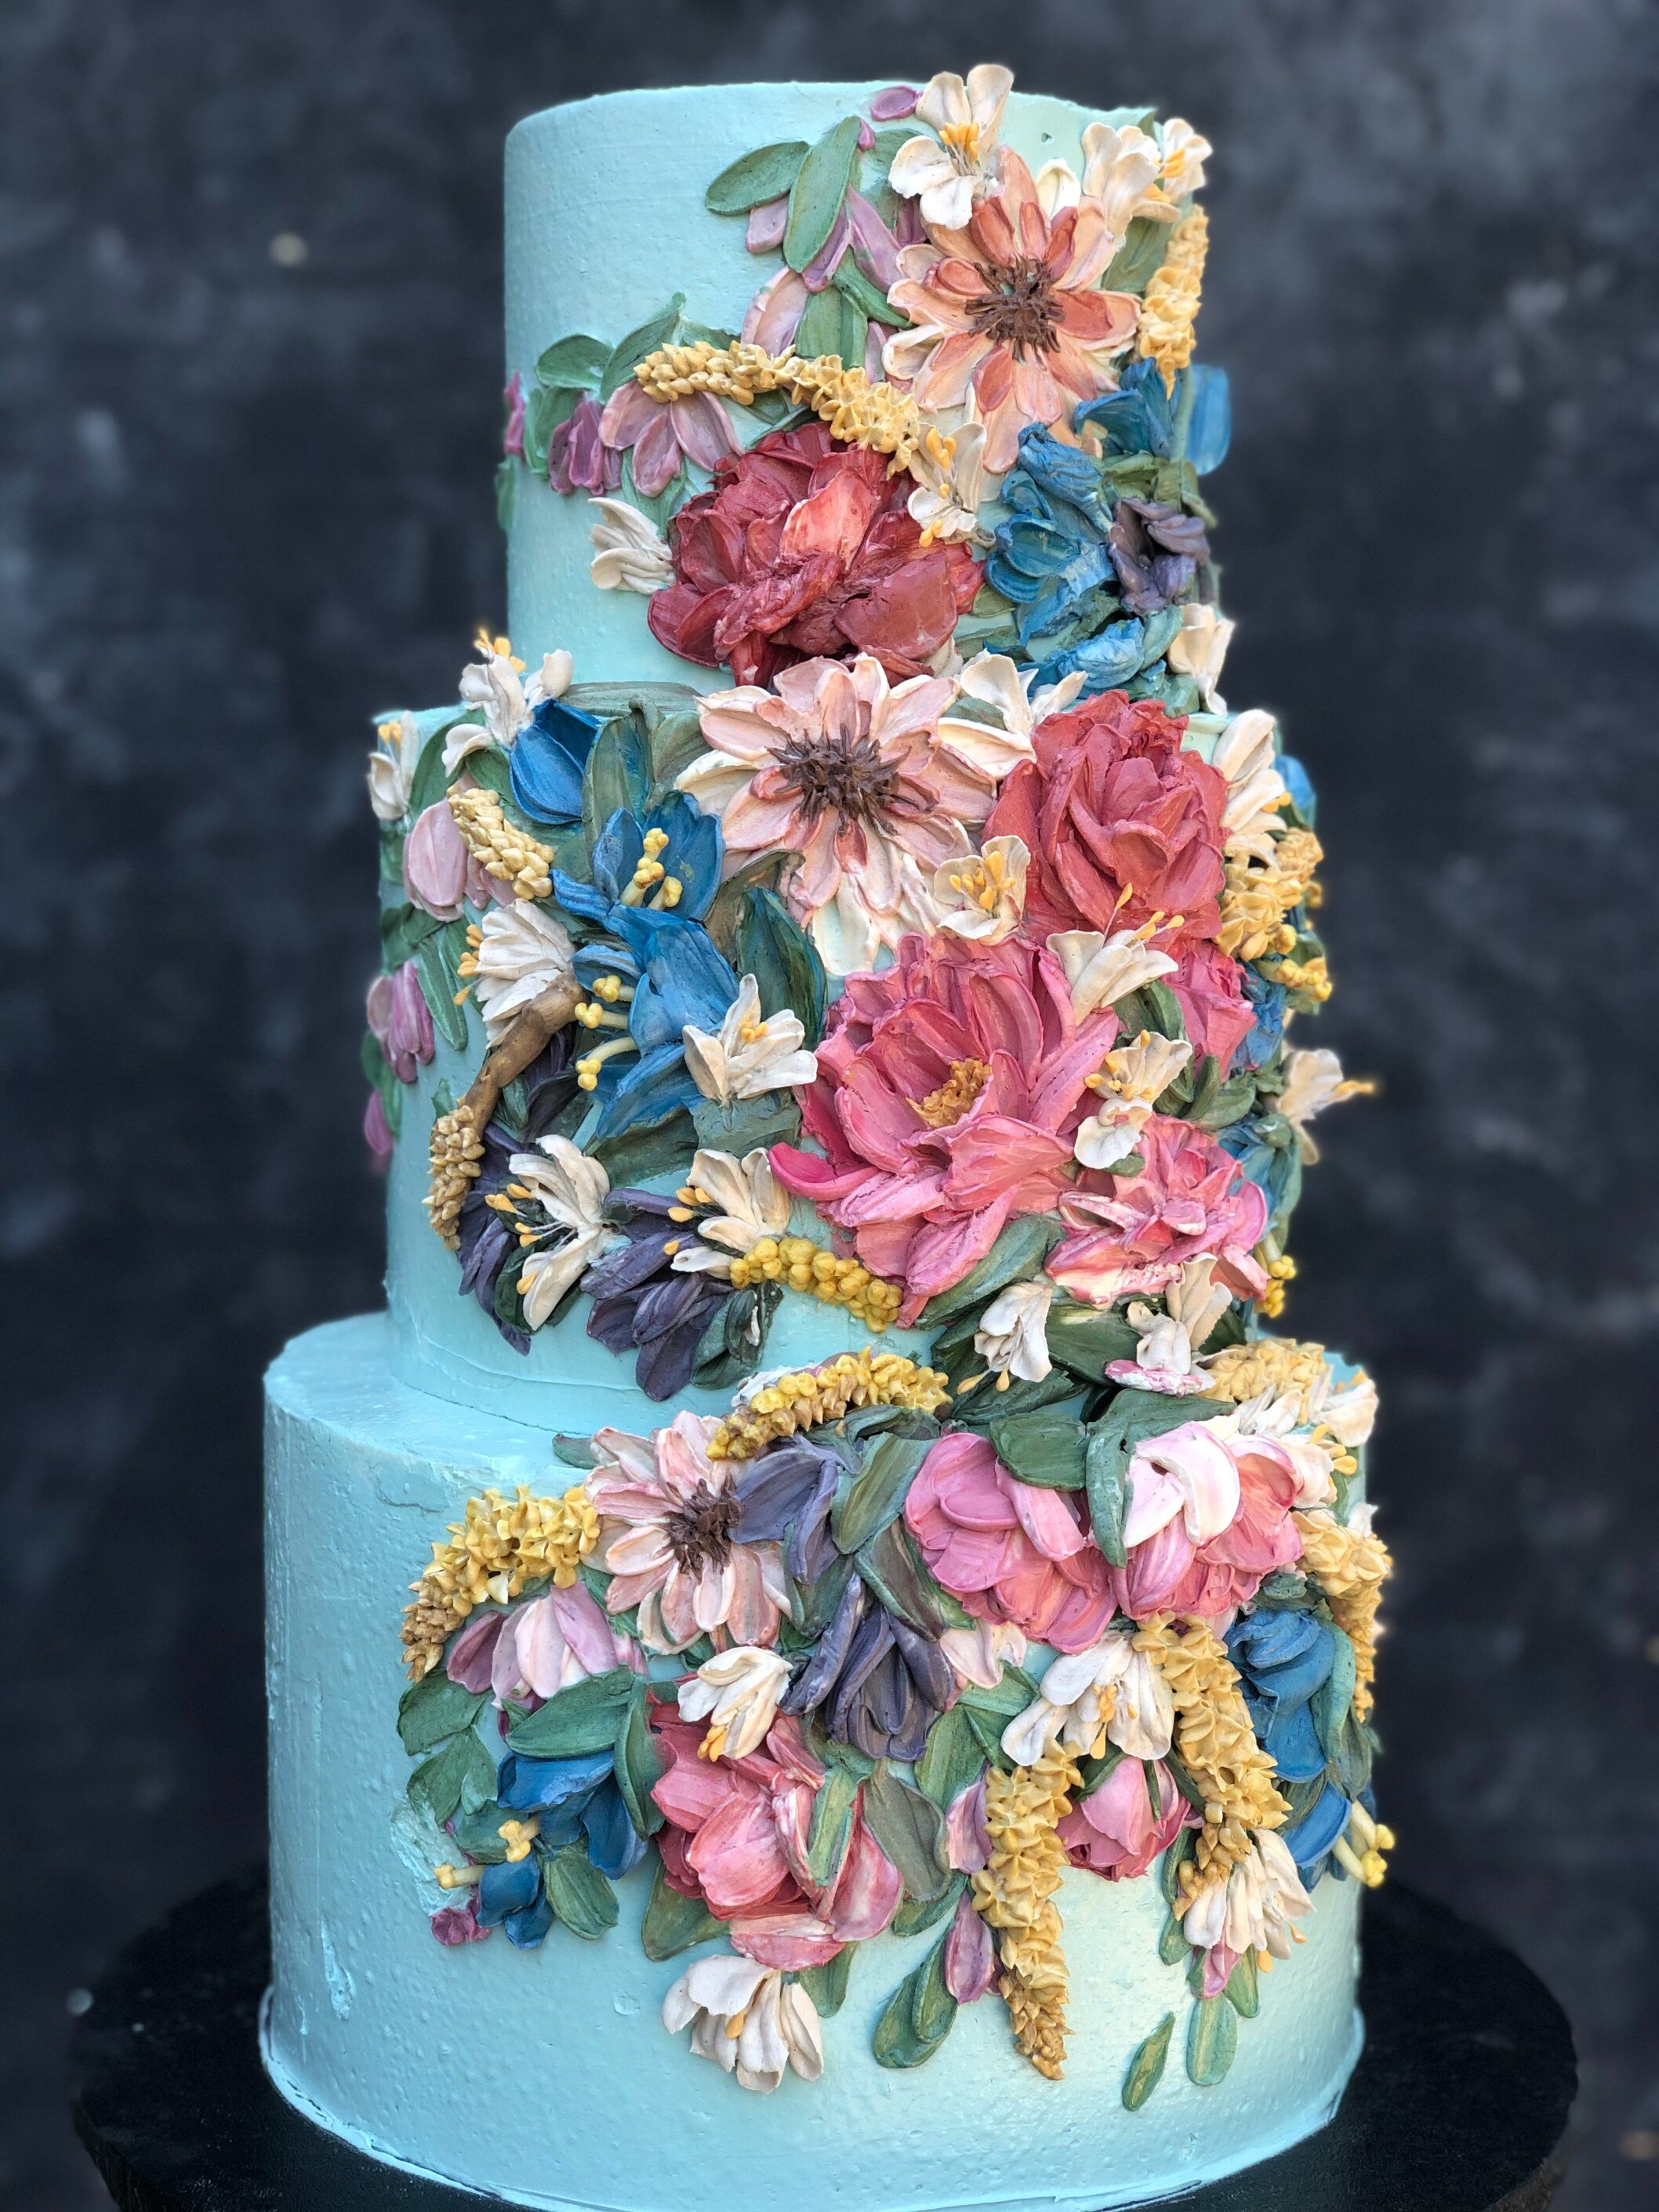 Buttercream flowercake & my first wedding cake! : r/cakedecorating